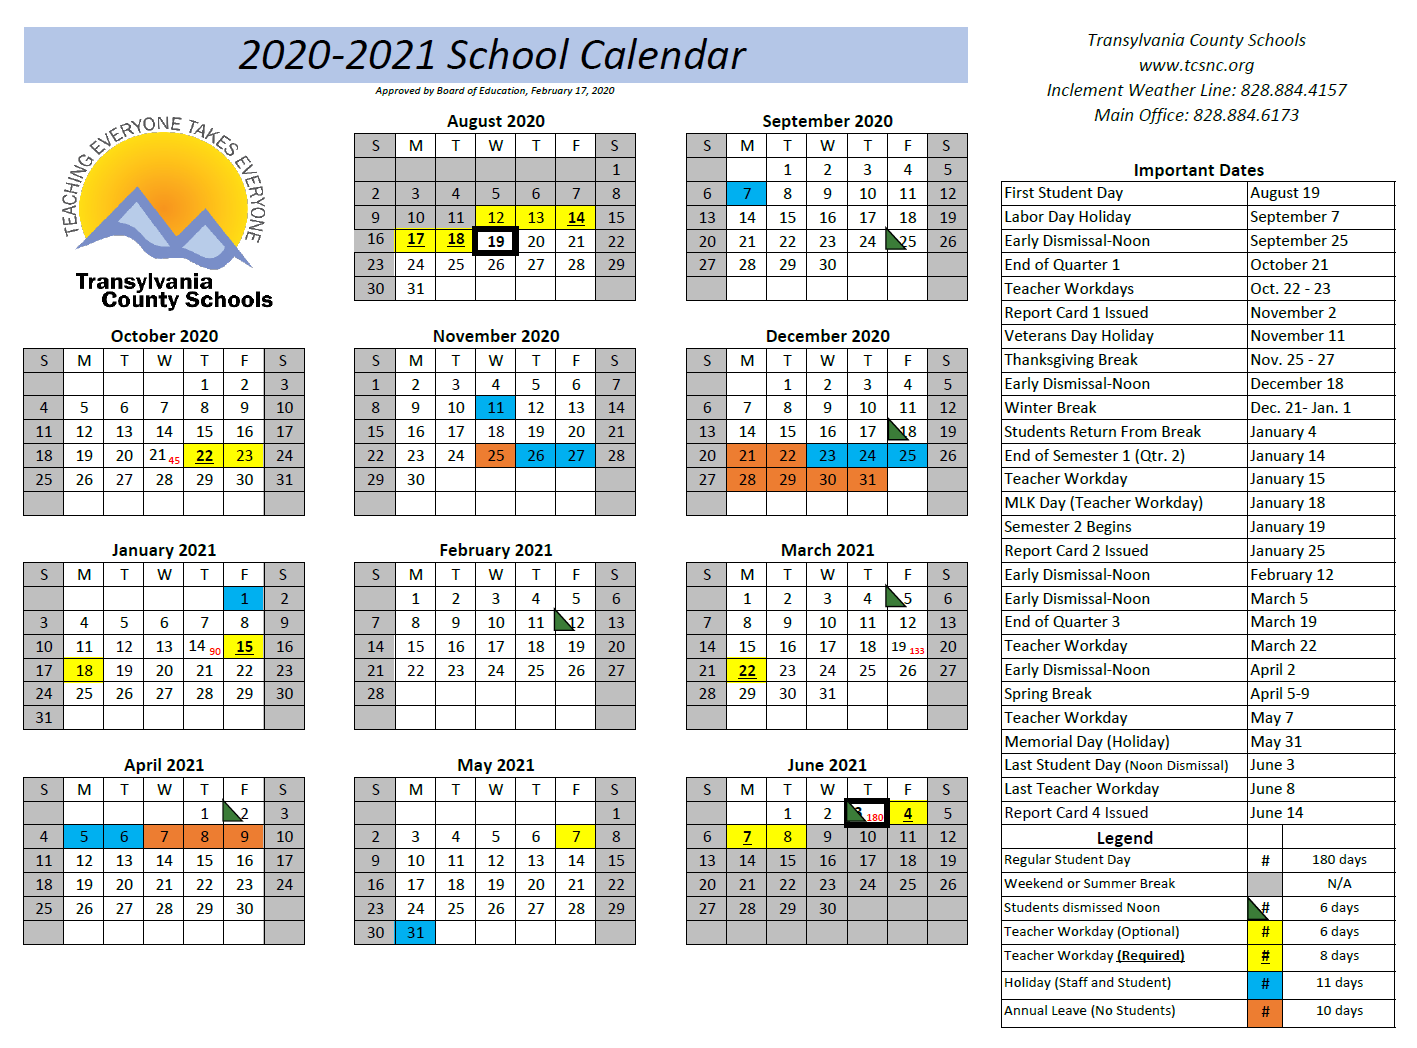 brevard-county-school-calendar-2022-22-2022-schoolcalendars